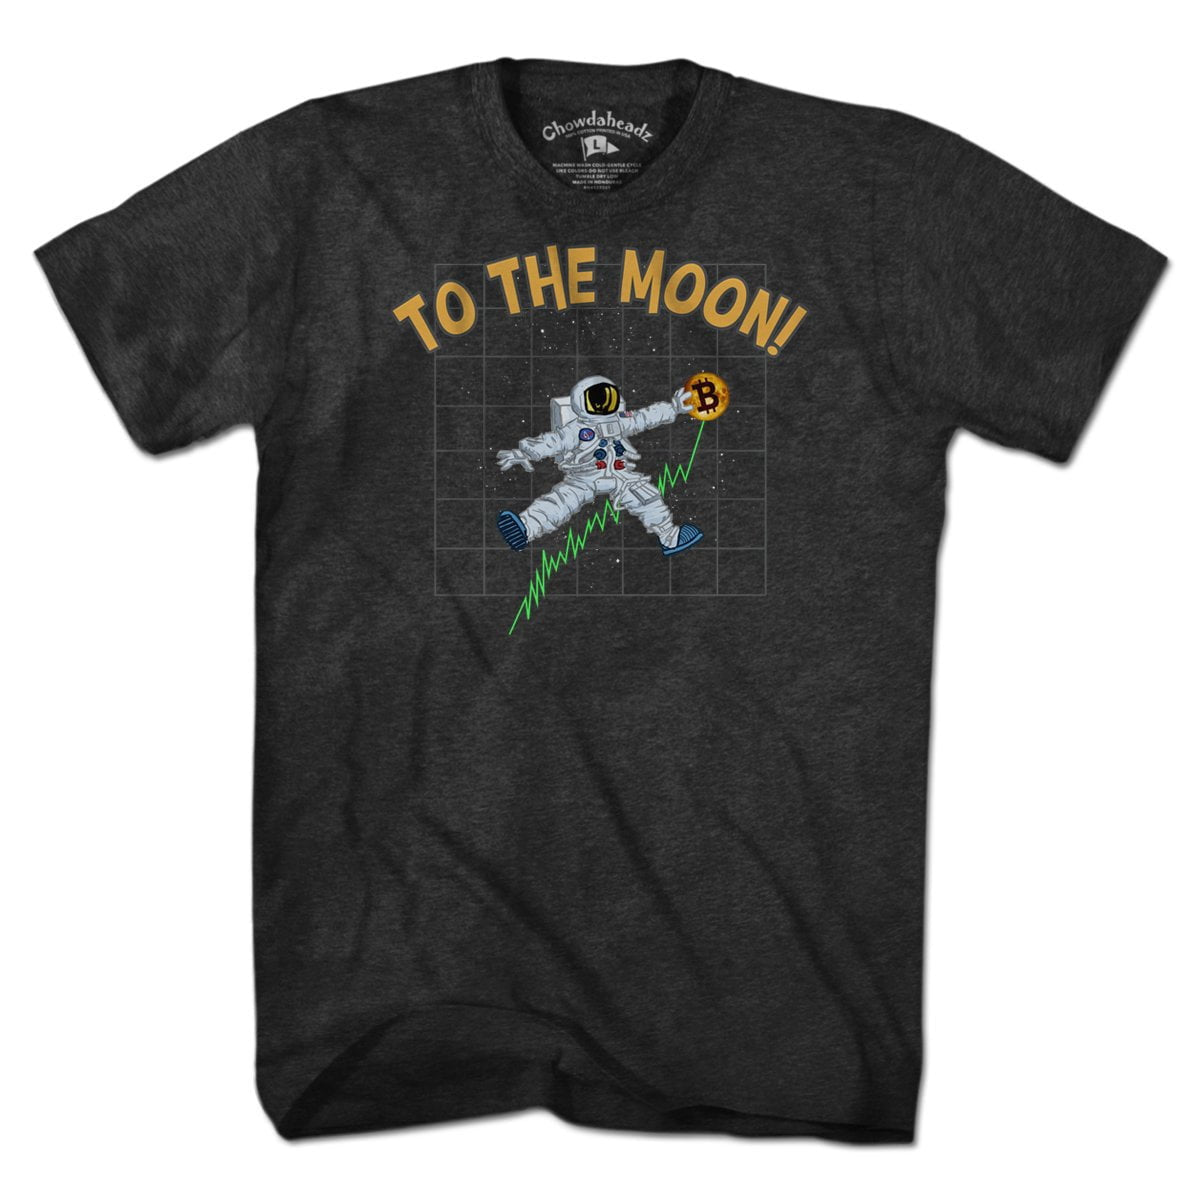 Bitcoin To The Moon T-Shirt - Chowdaheadz